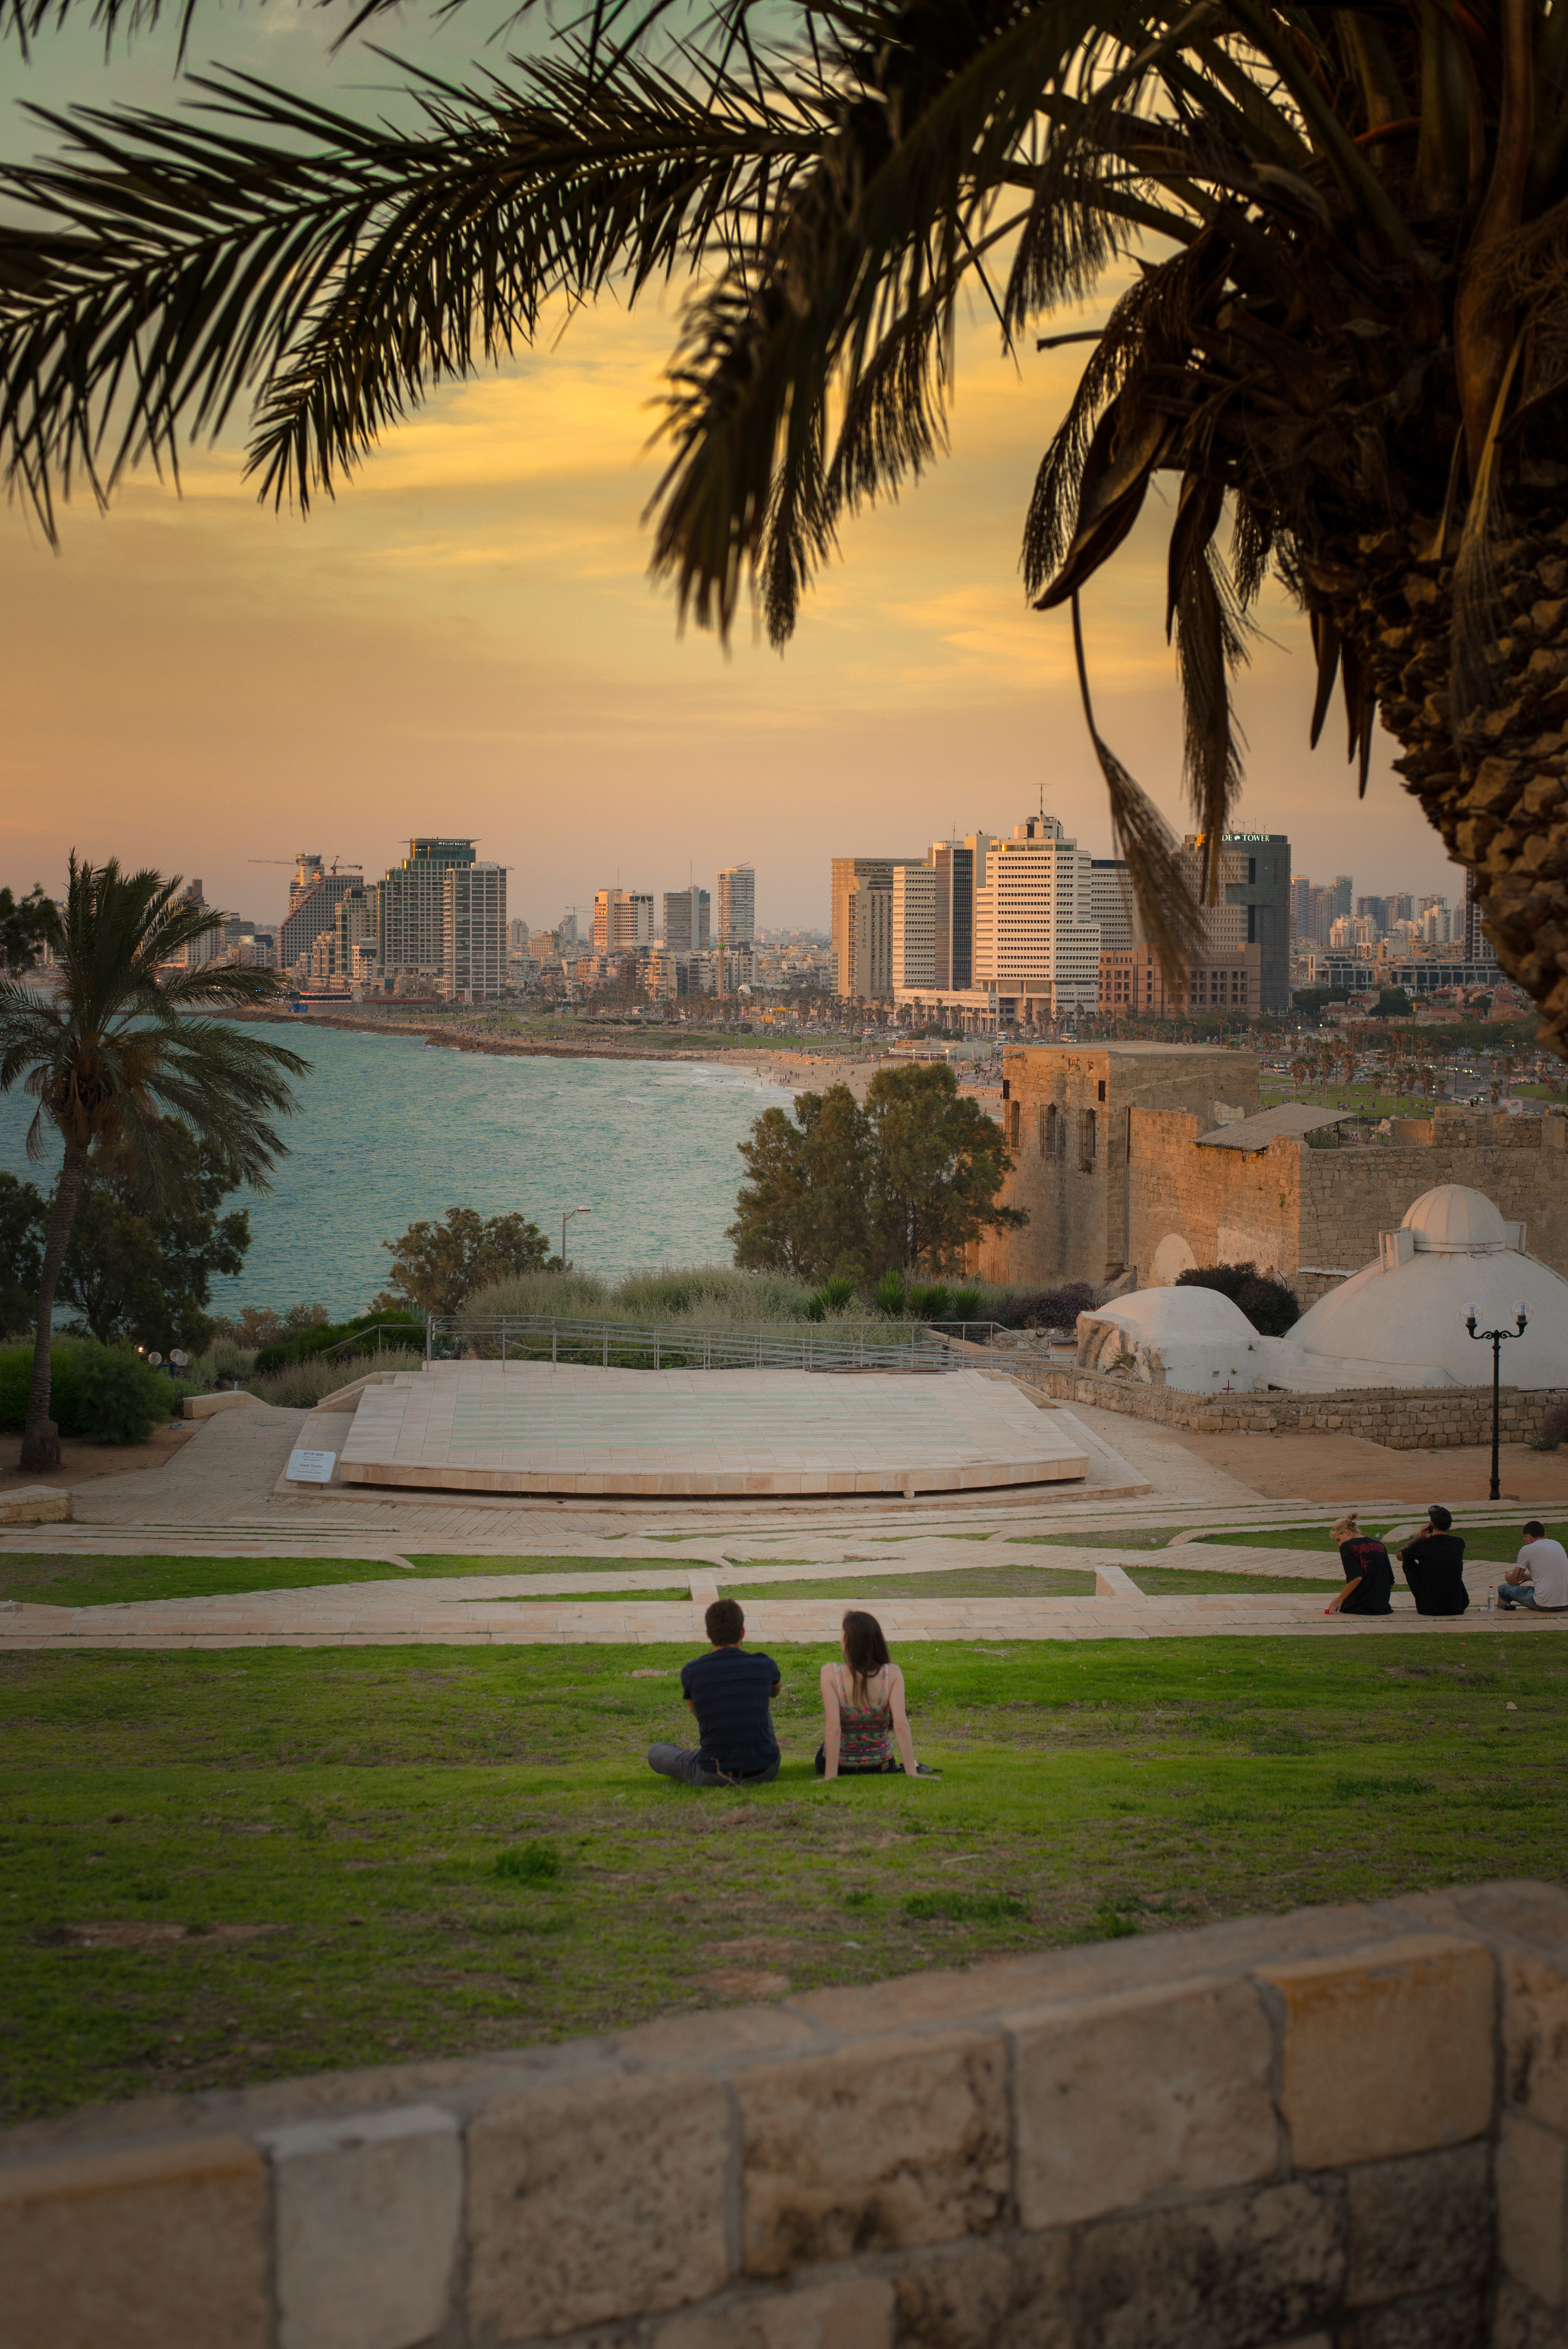 Last light. Tel-aviv. view from old town Jaffa.